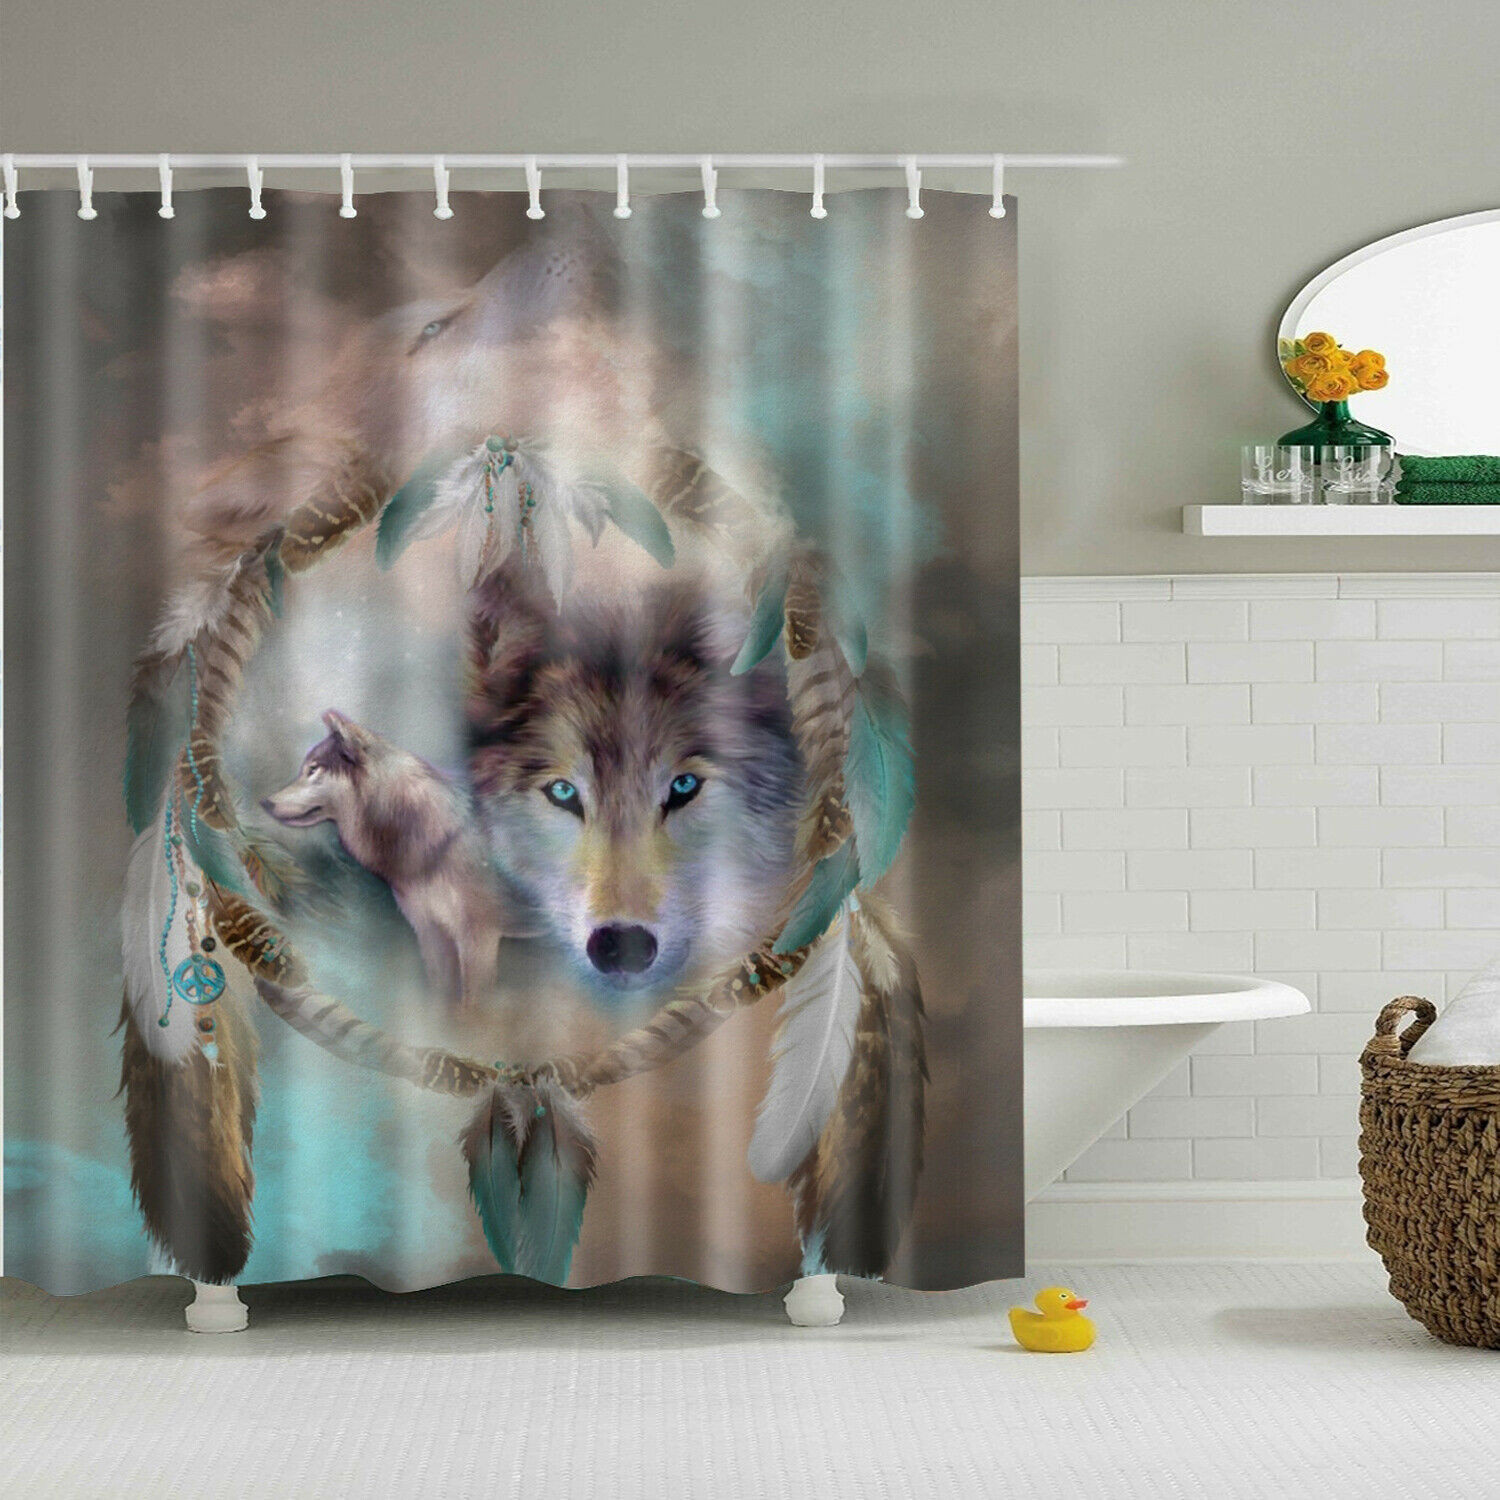 Wolf Bathroom Decor
 Animals Wolf Bathroom Shower Curtain Washable Fabric With